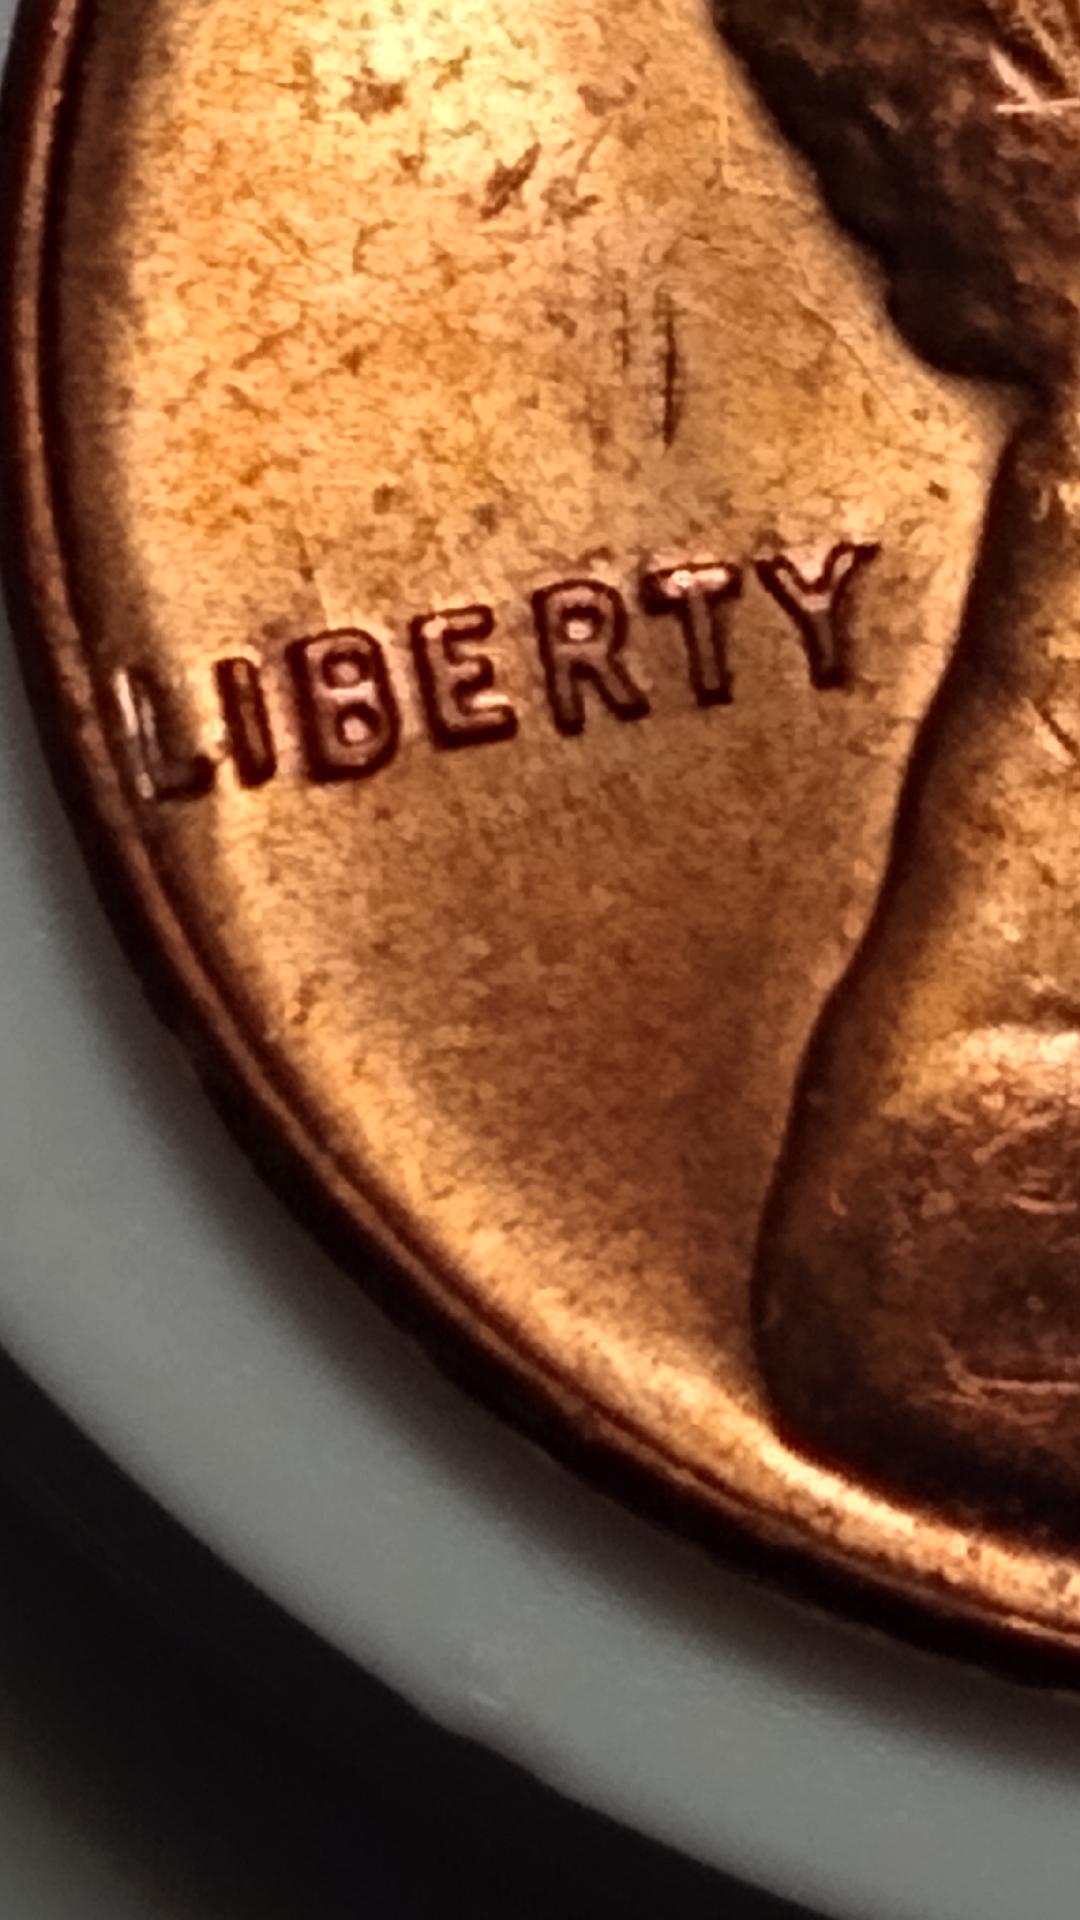 1961 penny obv liberty.jpg